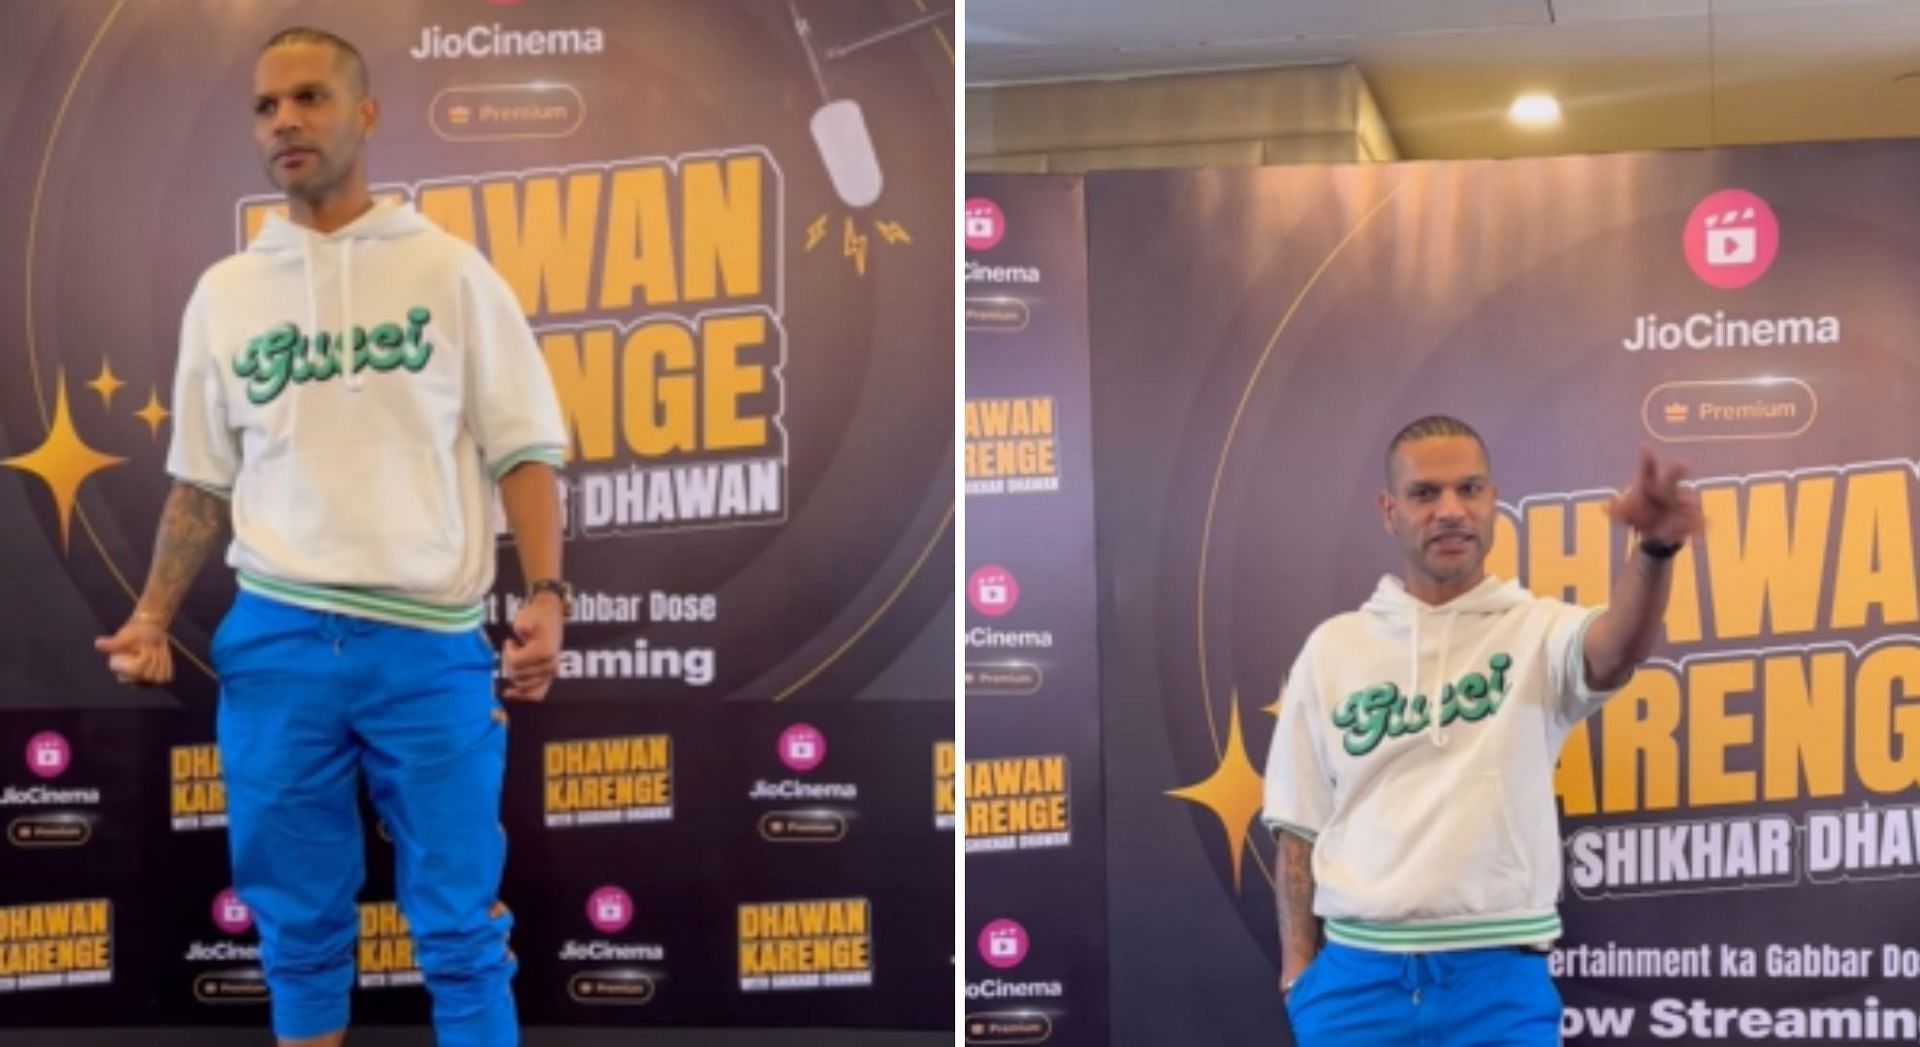 [Watch] Shikhar Dhawan papped at ‘Dhawan Karenge’ talk show promotional event